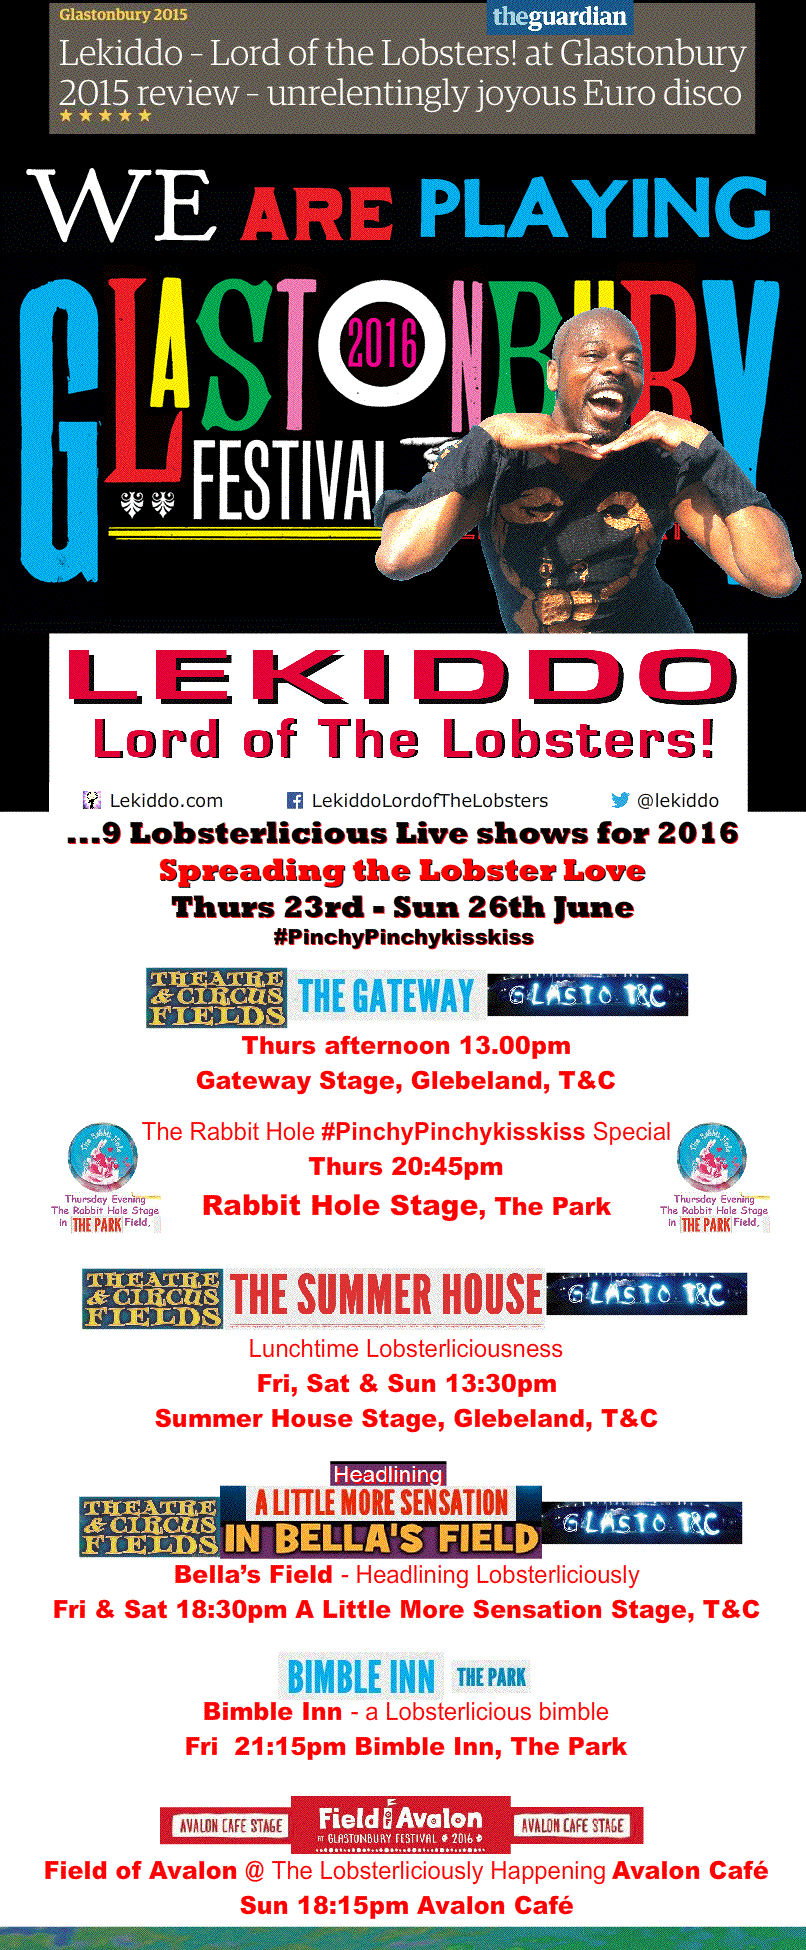 LEKIDDO - Lord of The Lobsters! live at #Glastonbury Festival (Official) 2016 @GlastoFest @lekiddo @glastotandc @GlastoAstro @ShangrilaGlasto @glastocabaret @glastofreepress @GlastoWatch @GladeAreaGlasto @FieldofAvalon @GlastoTheCommon @TheGlastoThingy #PinchyPinchykisskiss #Glasto2016 #G'bury2016 #GlastonburyFestival #Festival #Glasto #PPkk